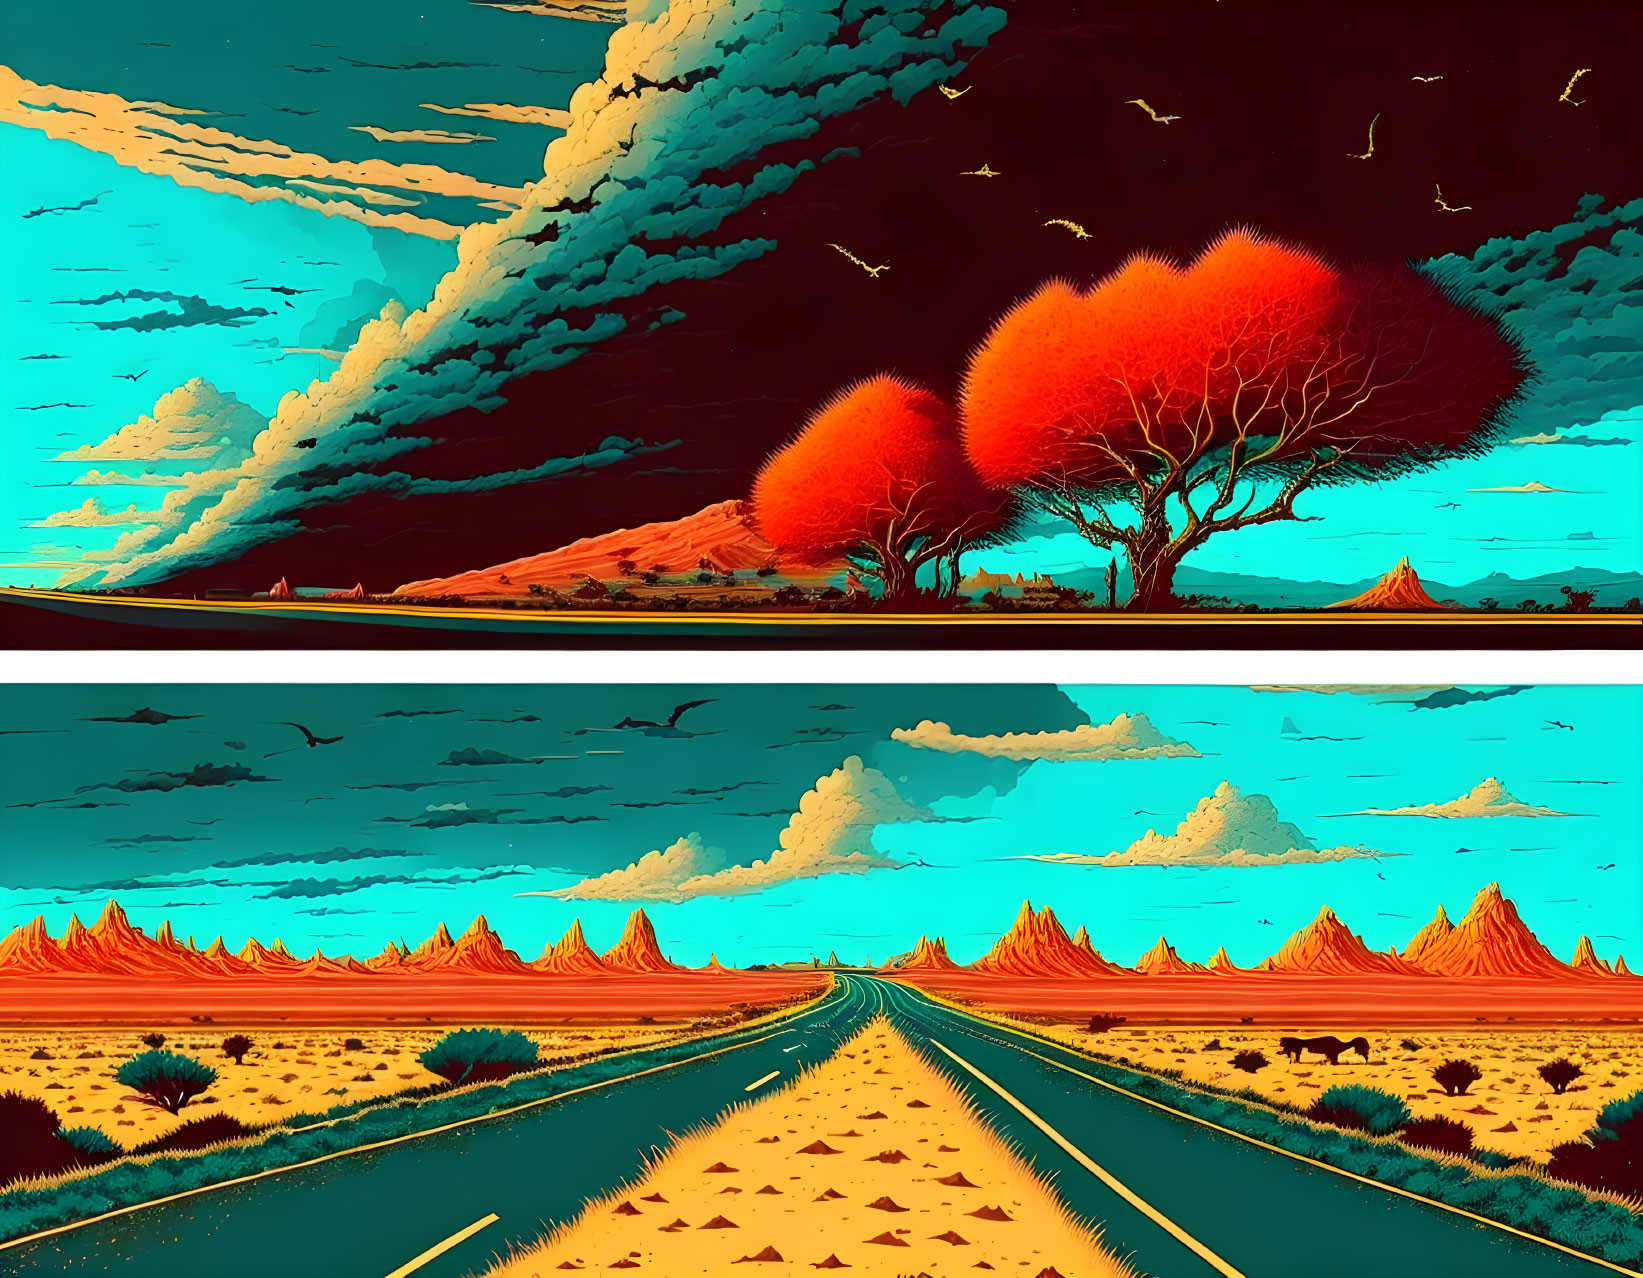 Colorful digital artwork: Contrasting landscapes, vibrant skies, orange terrain, red foliage, birds in